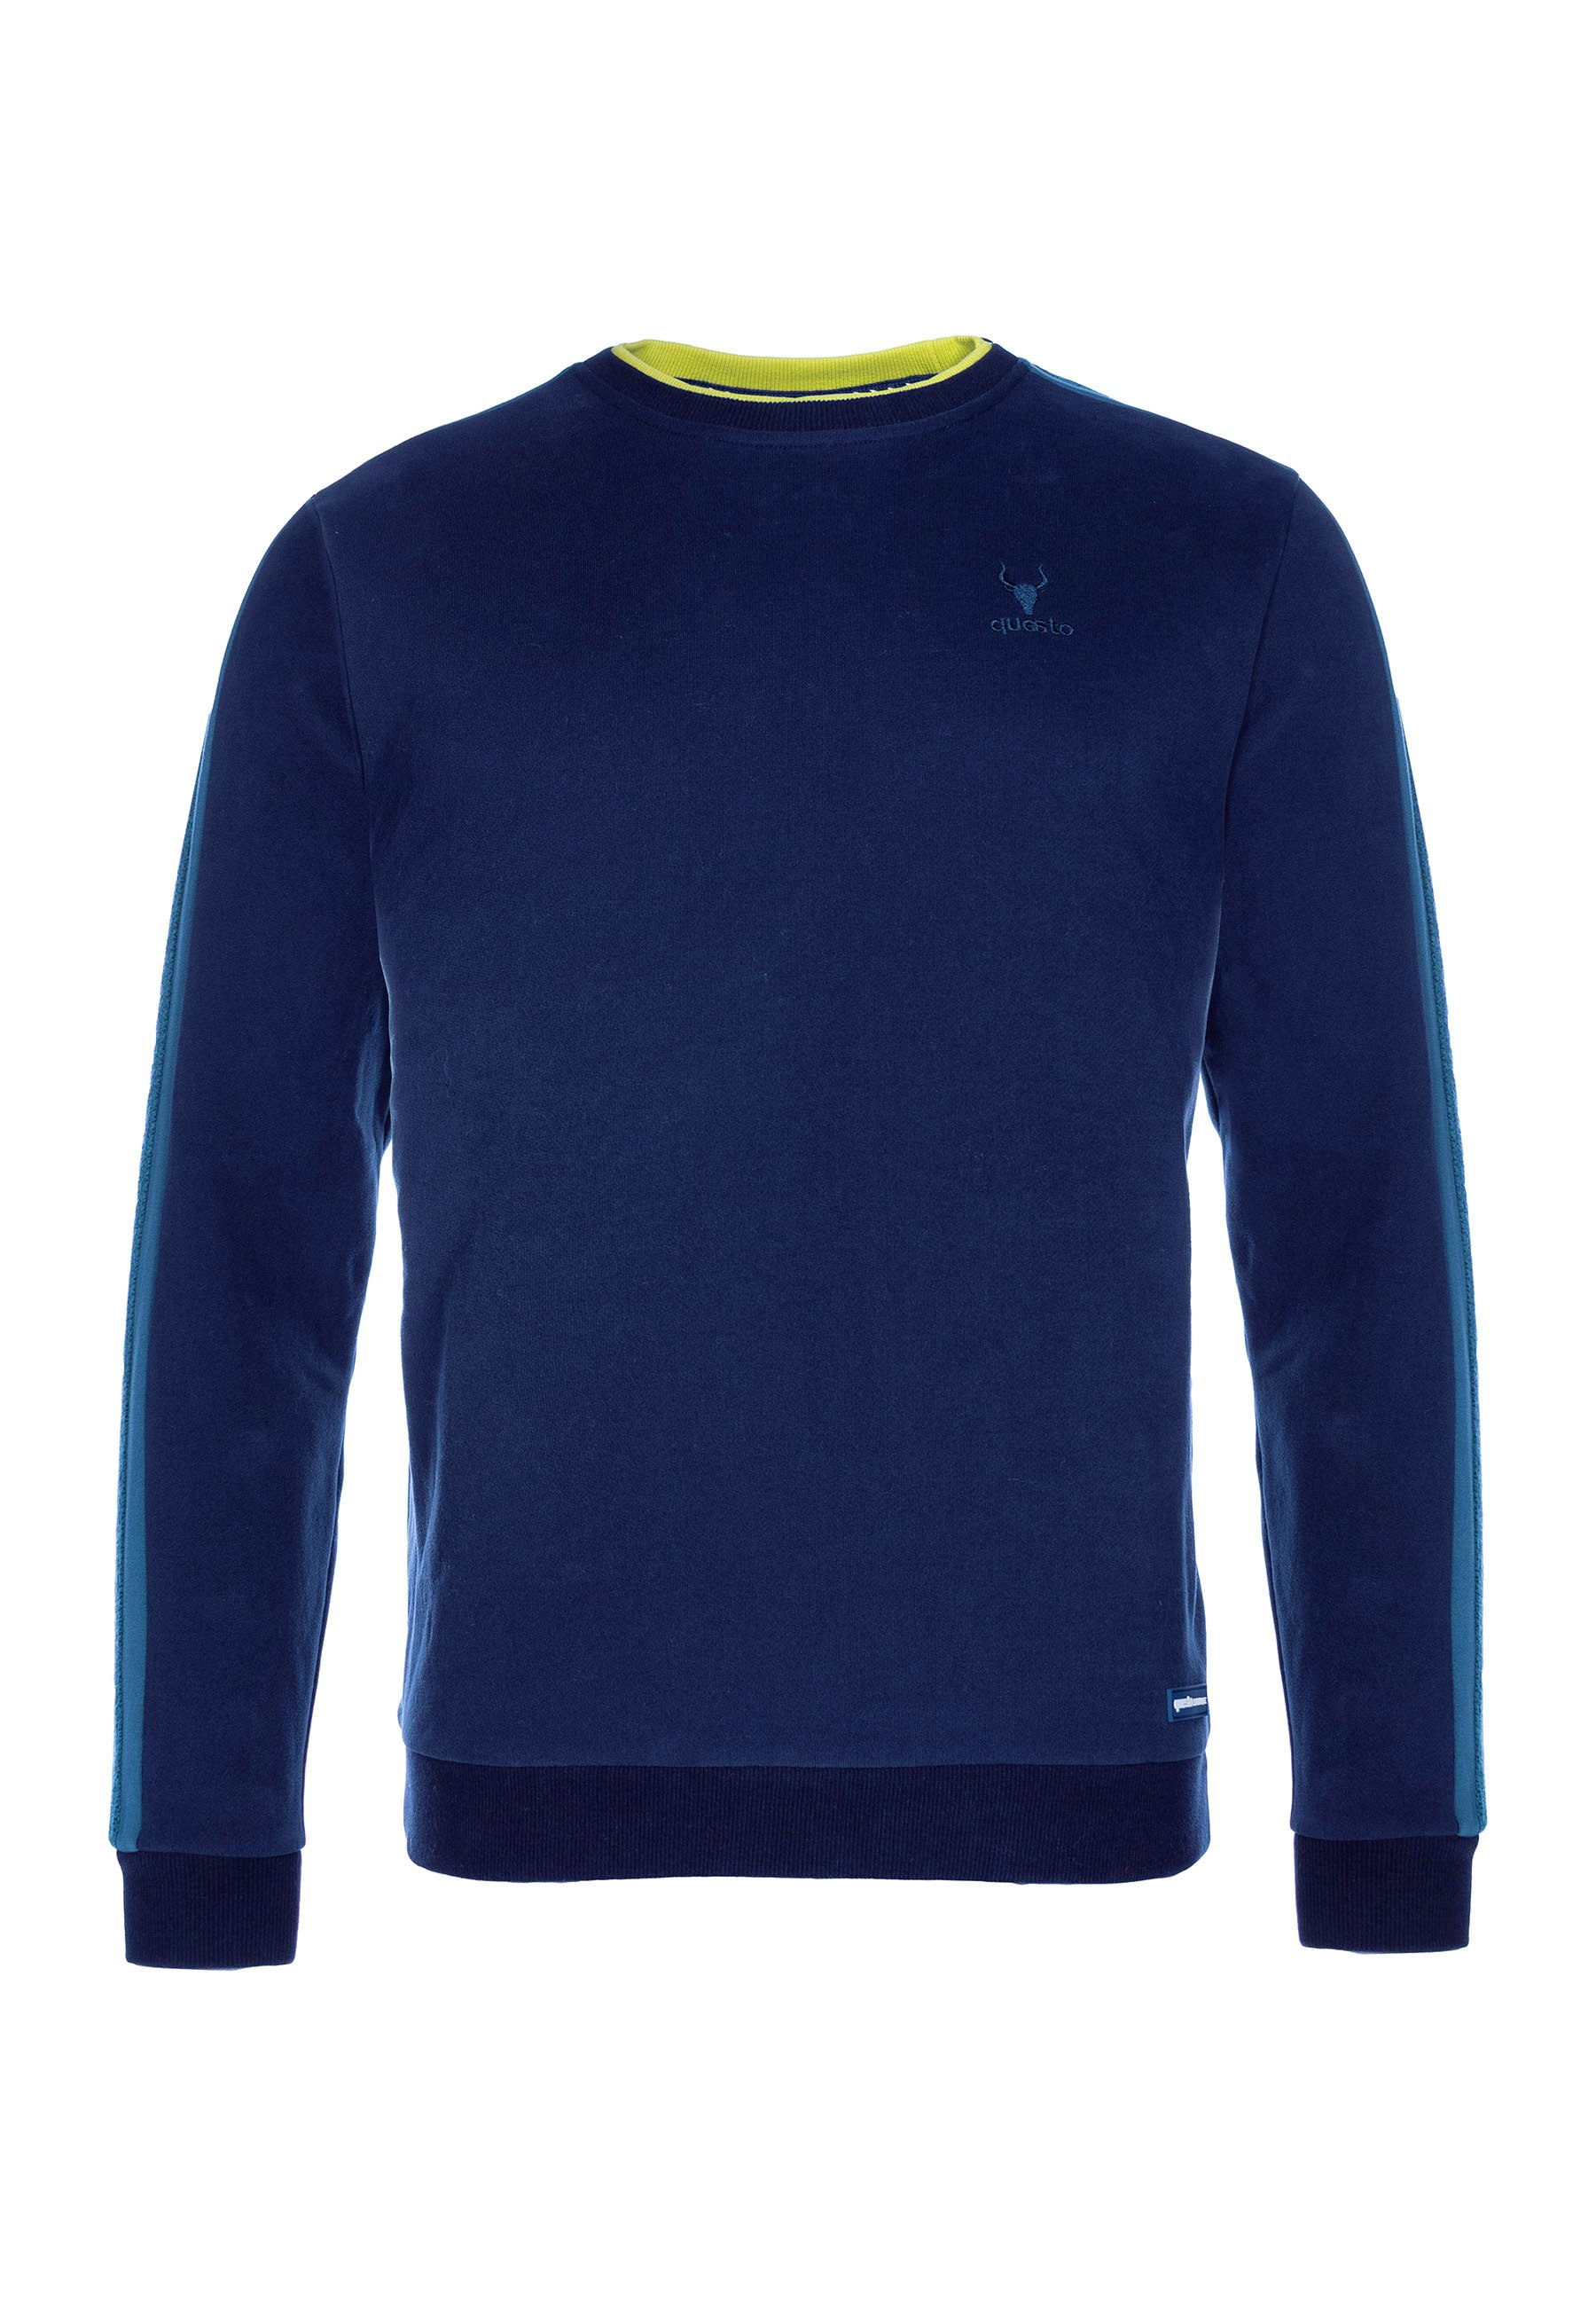 Questo Sweatshirt Eiko nautical blue